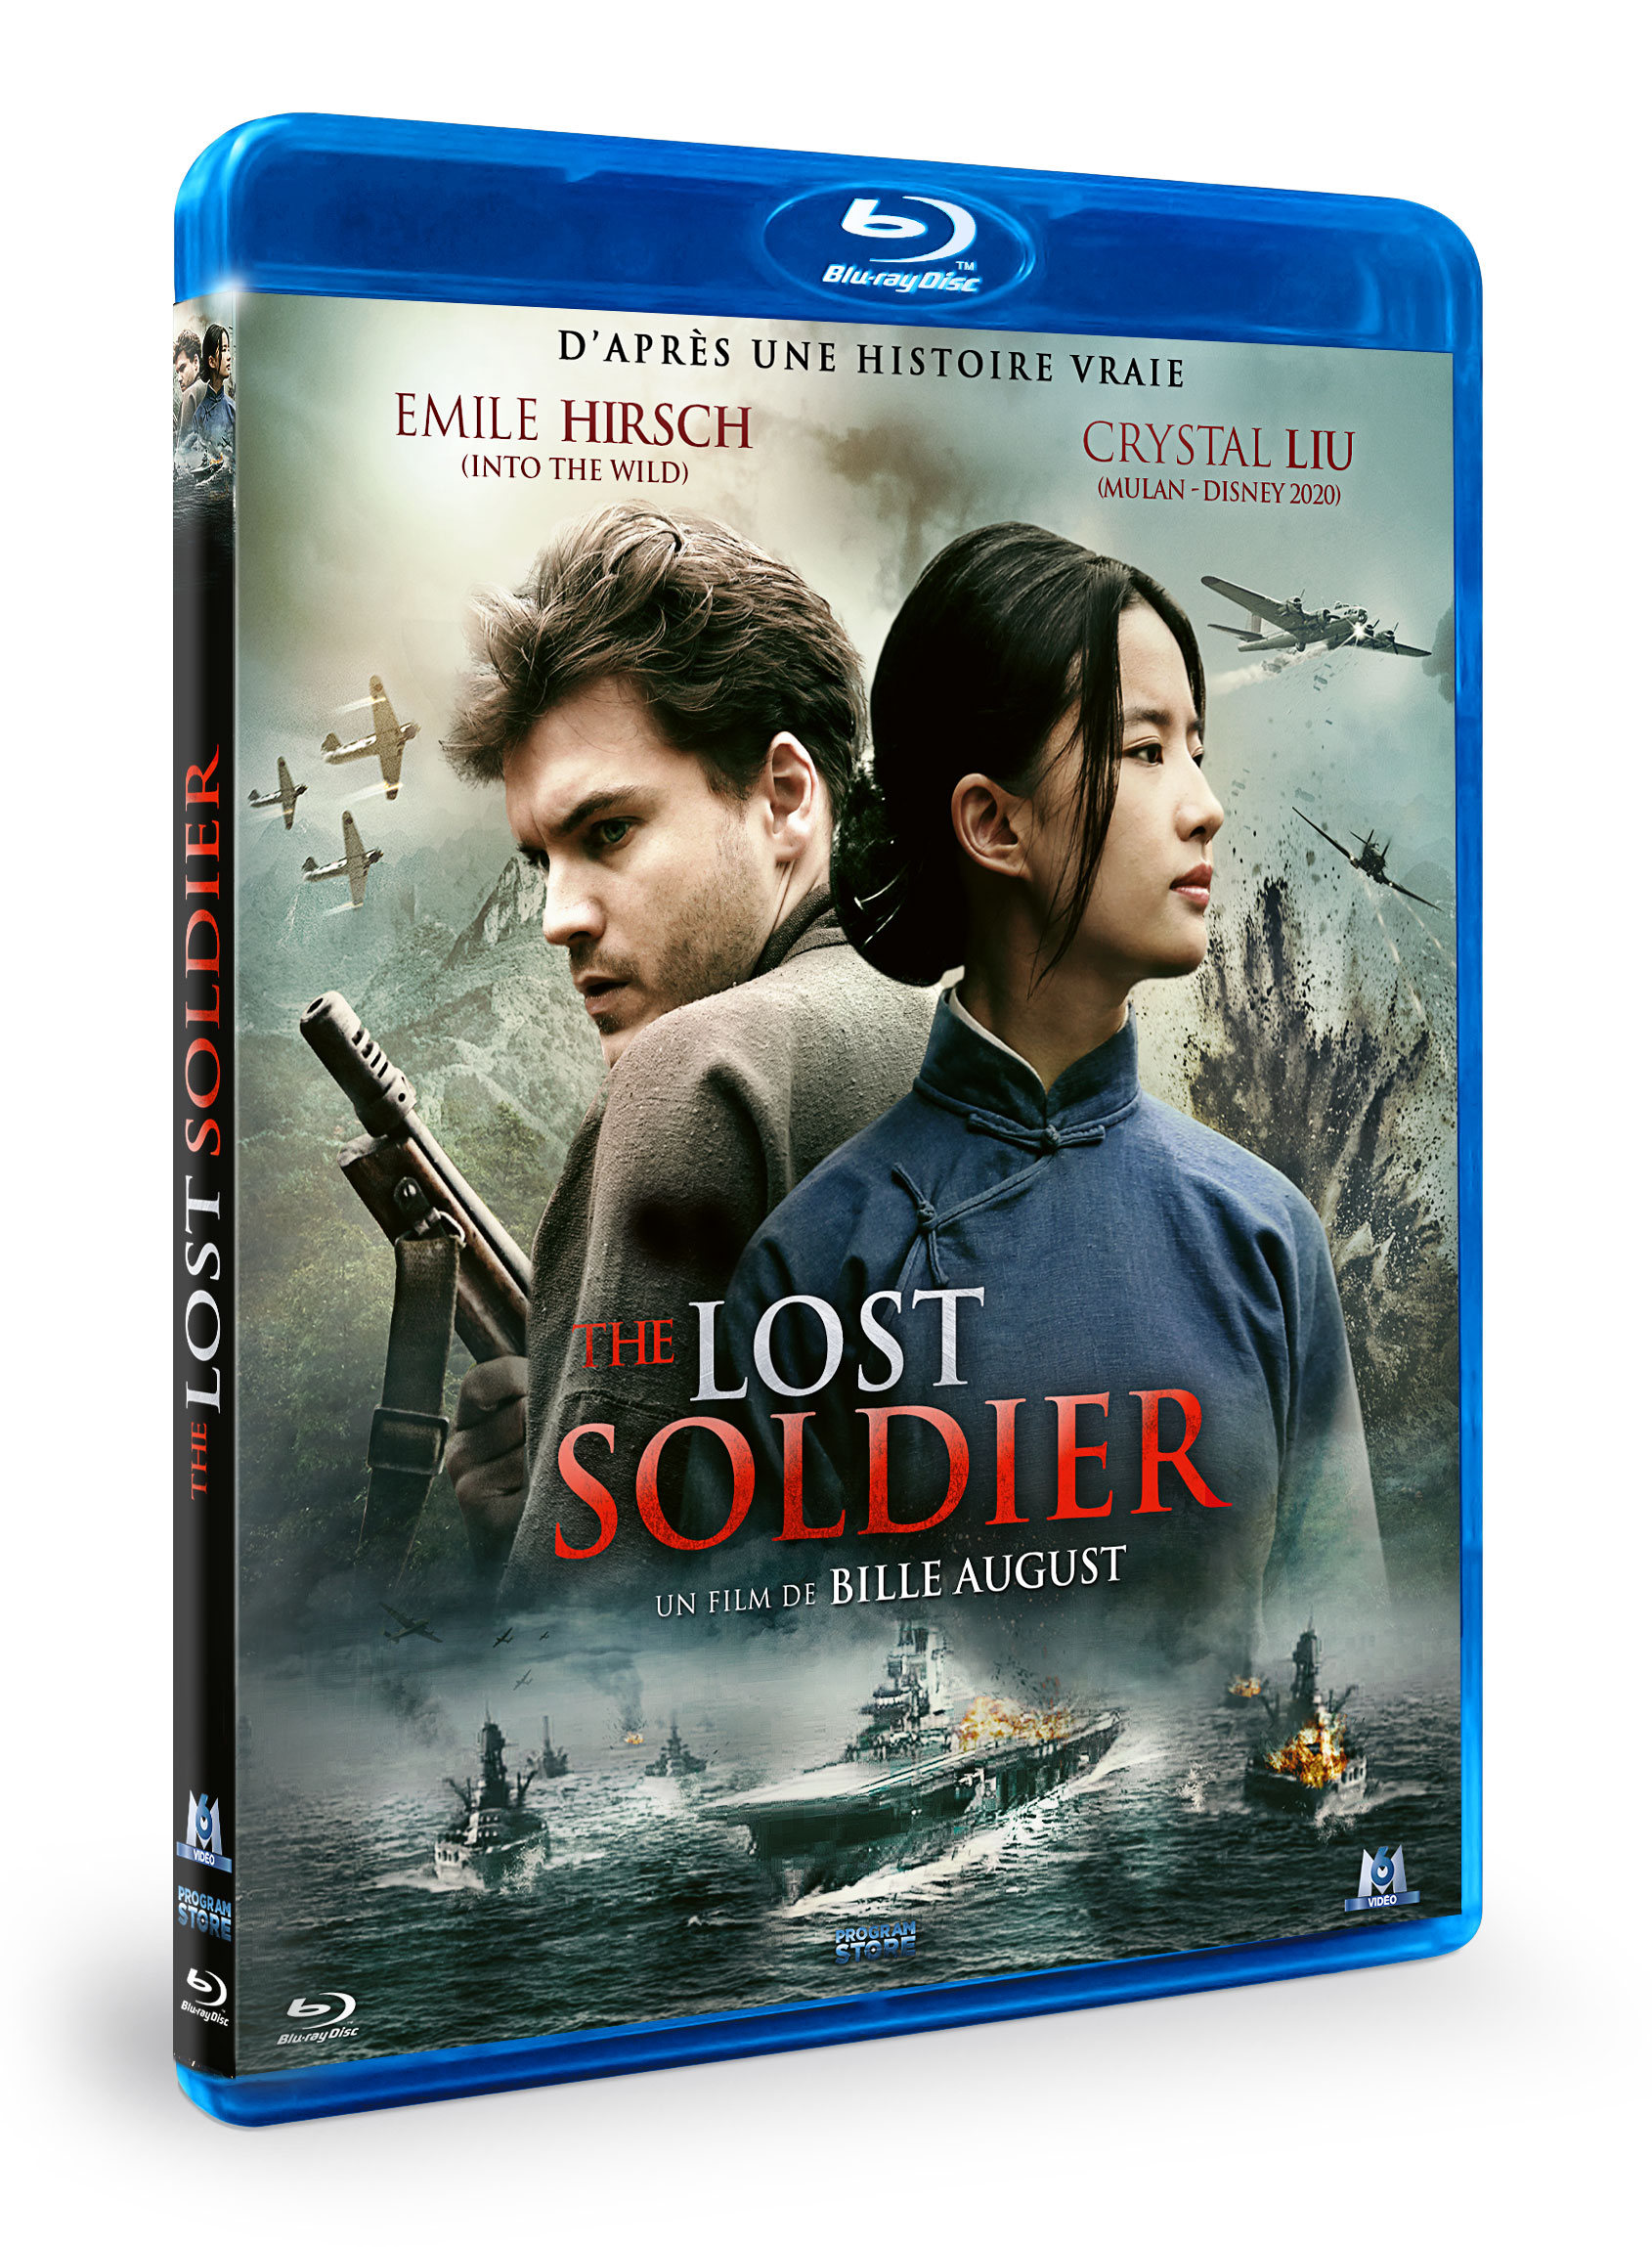 The Lost Soldier de Bille August sort en Blu-ray et DVD.